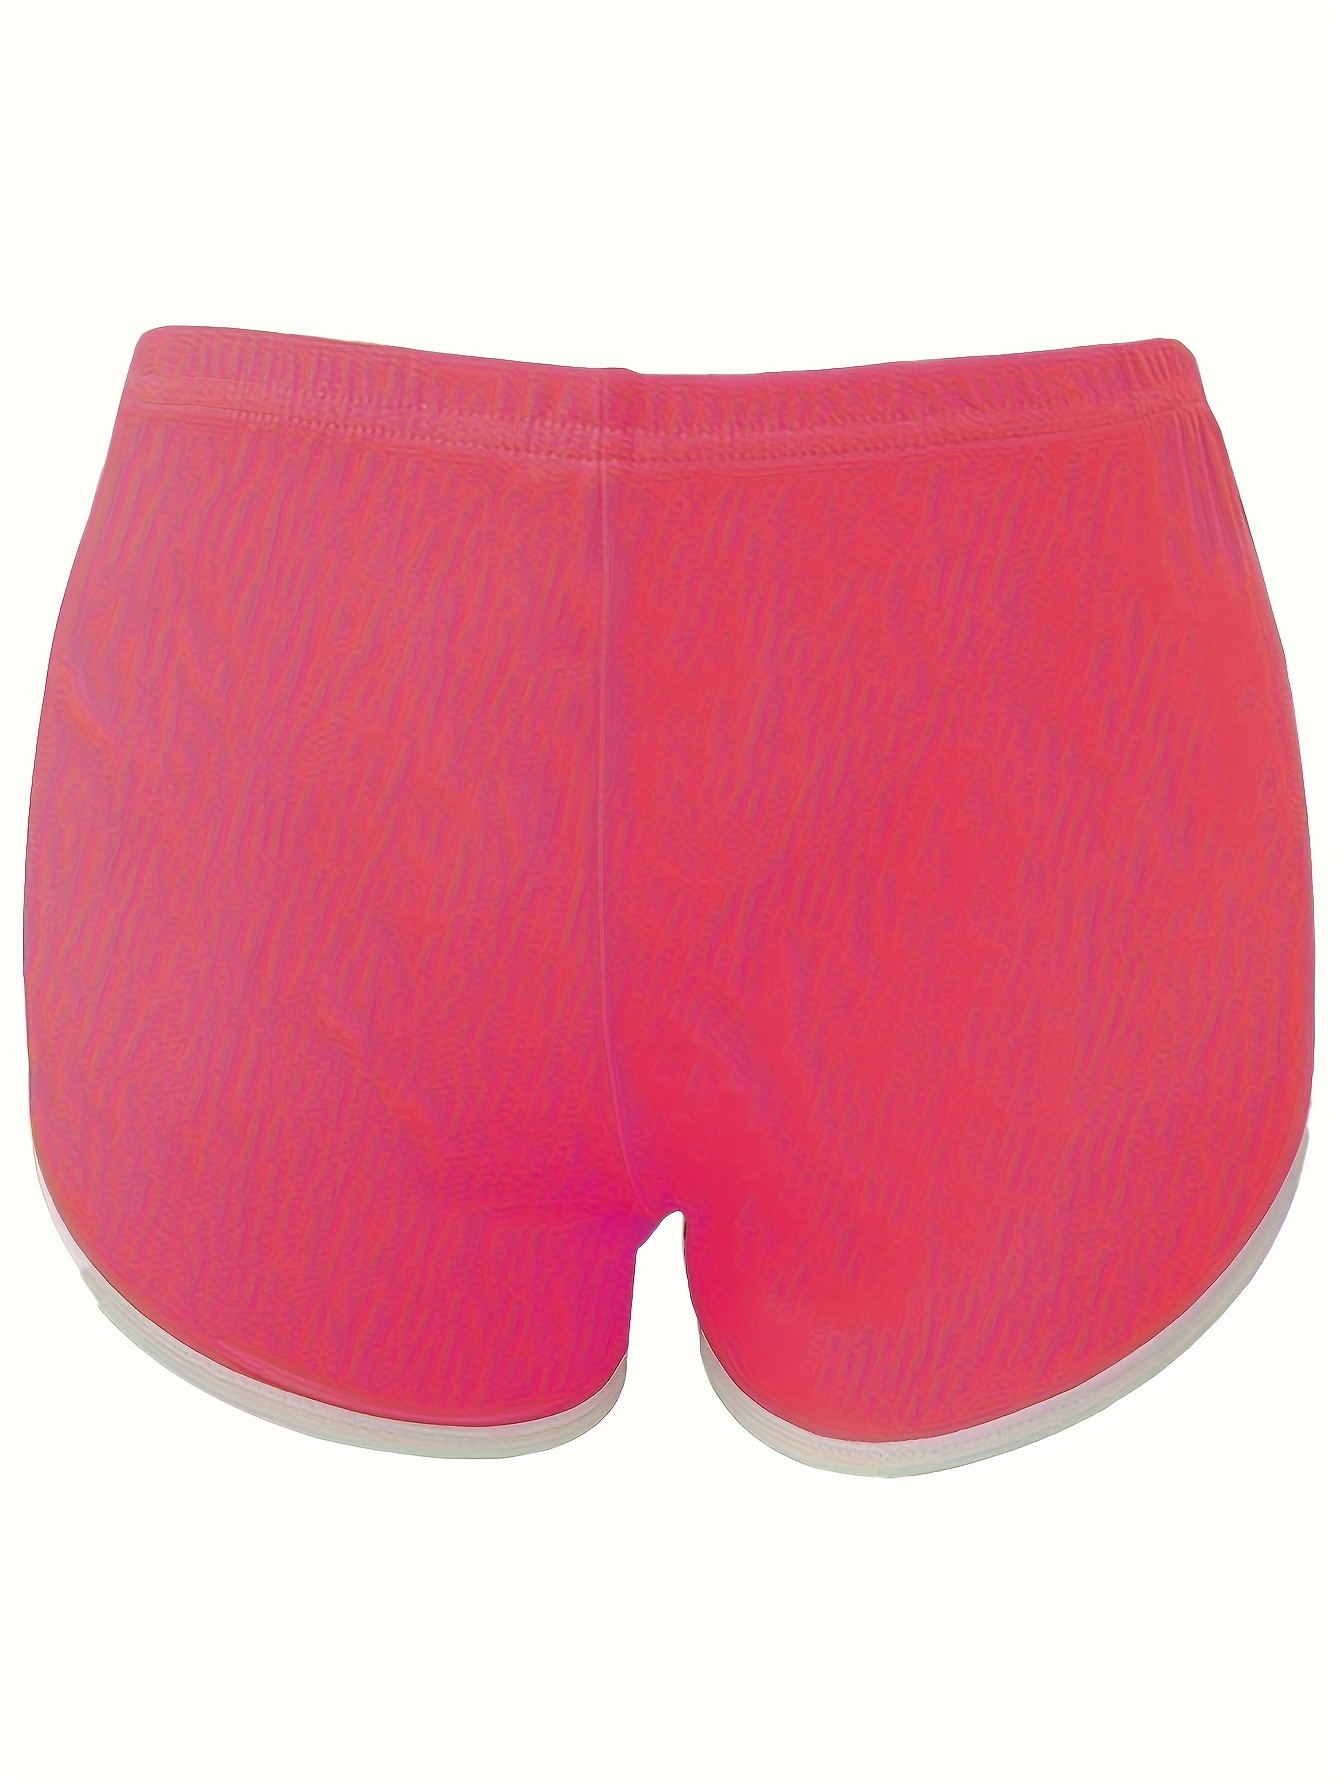 CAICJ98 Compression Leggings for Women Cotton Sport Shorts Yoga Dance Short  Pants Summer Athletic Shorts Hot Pink,XL 